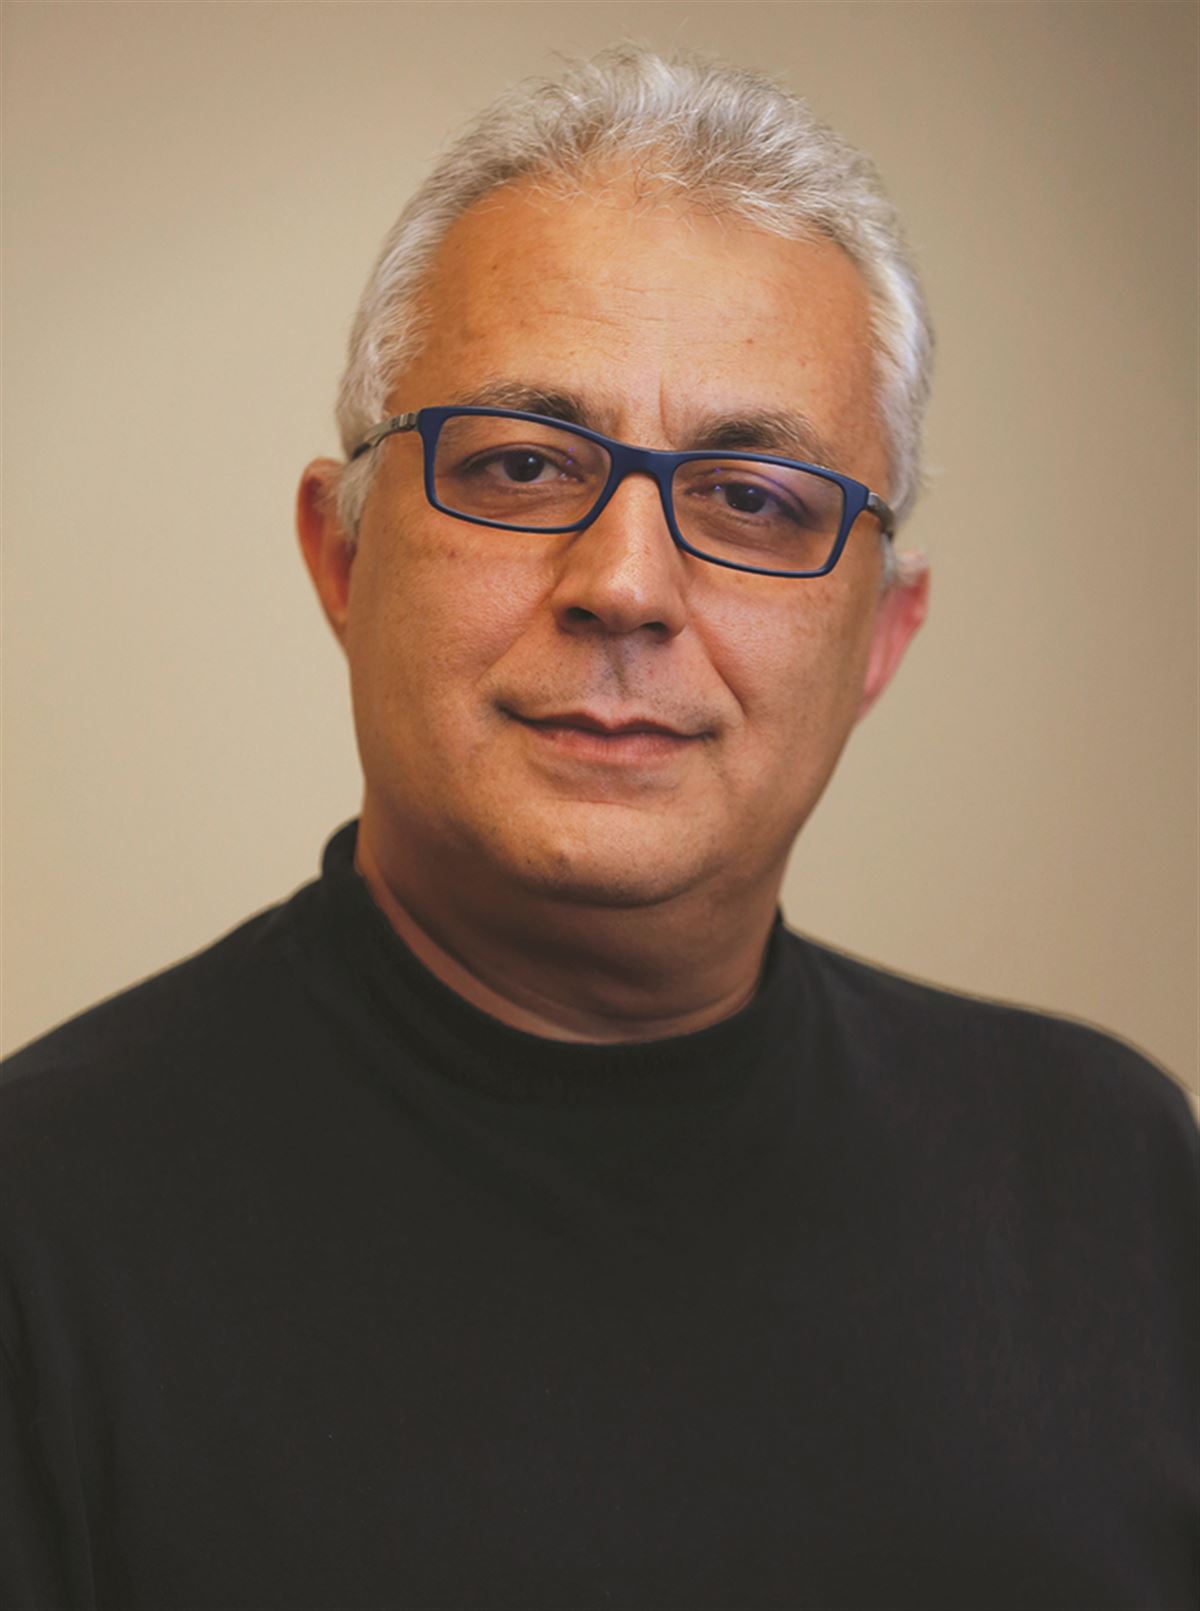 Dr. Ahmad Zakeri